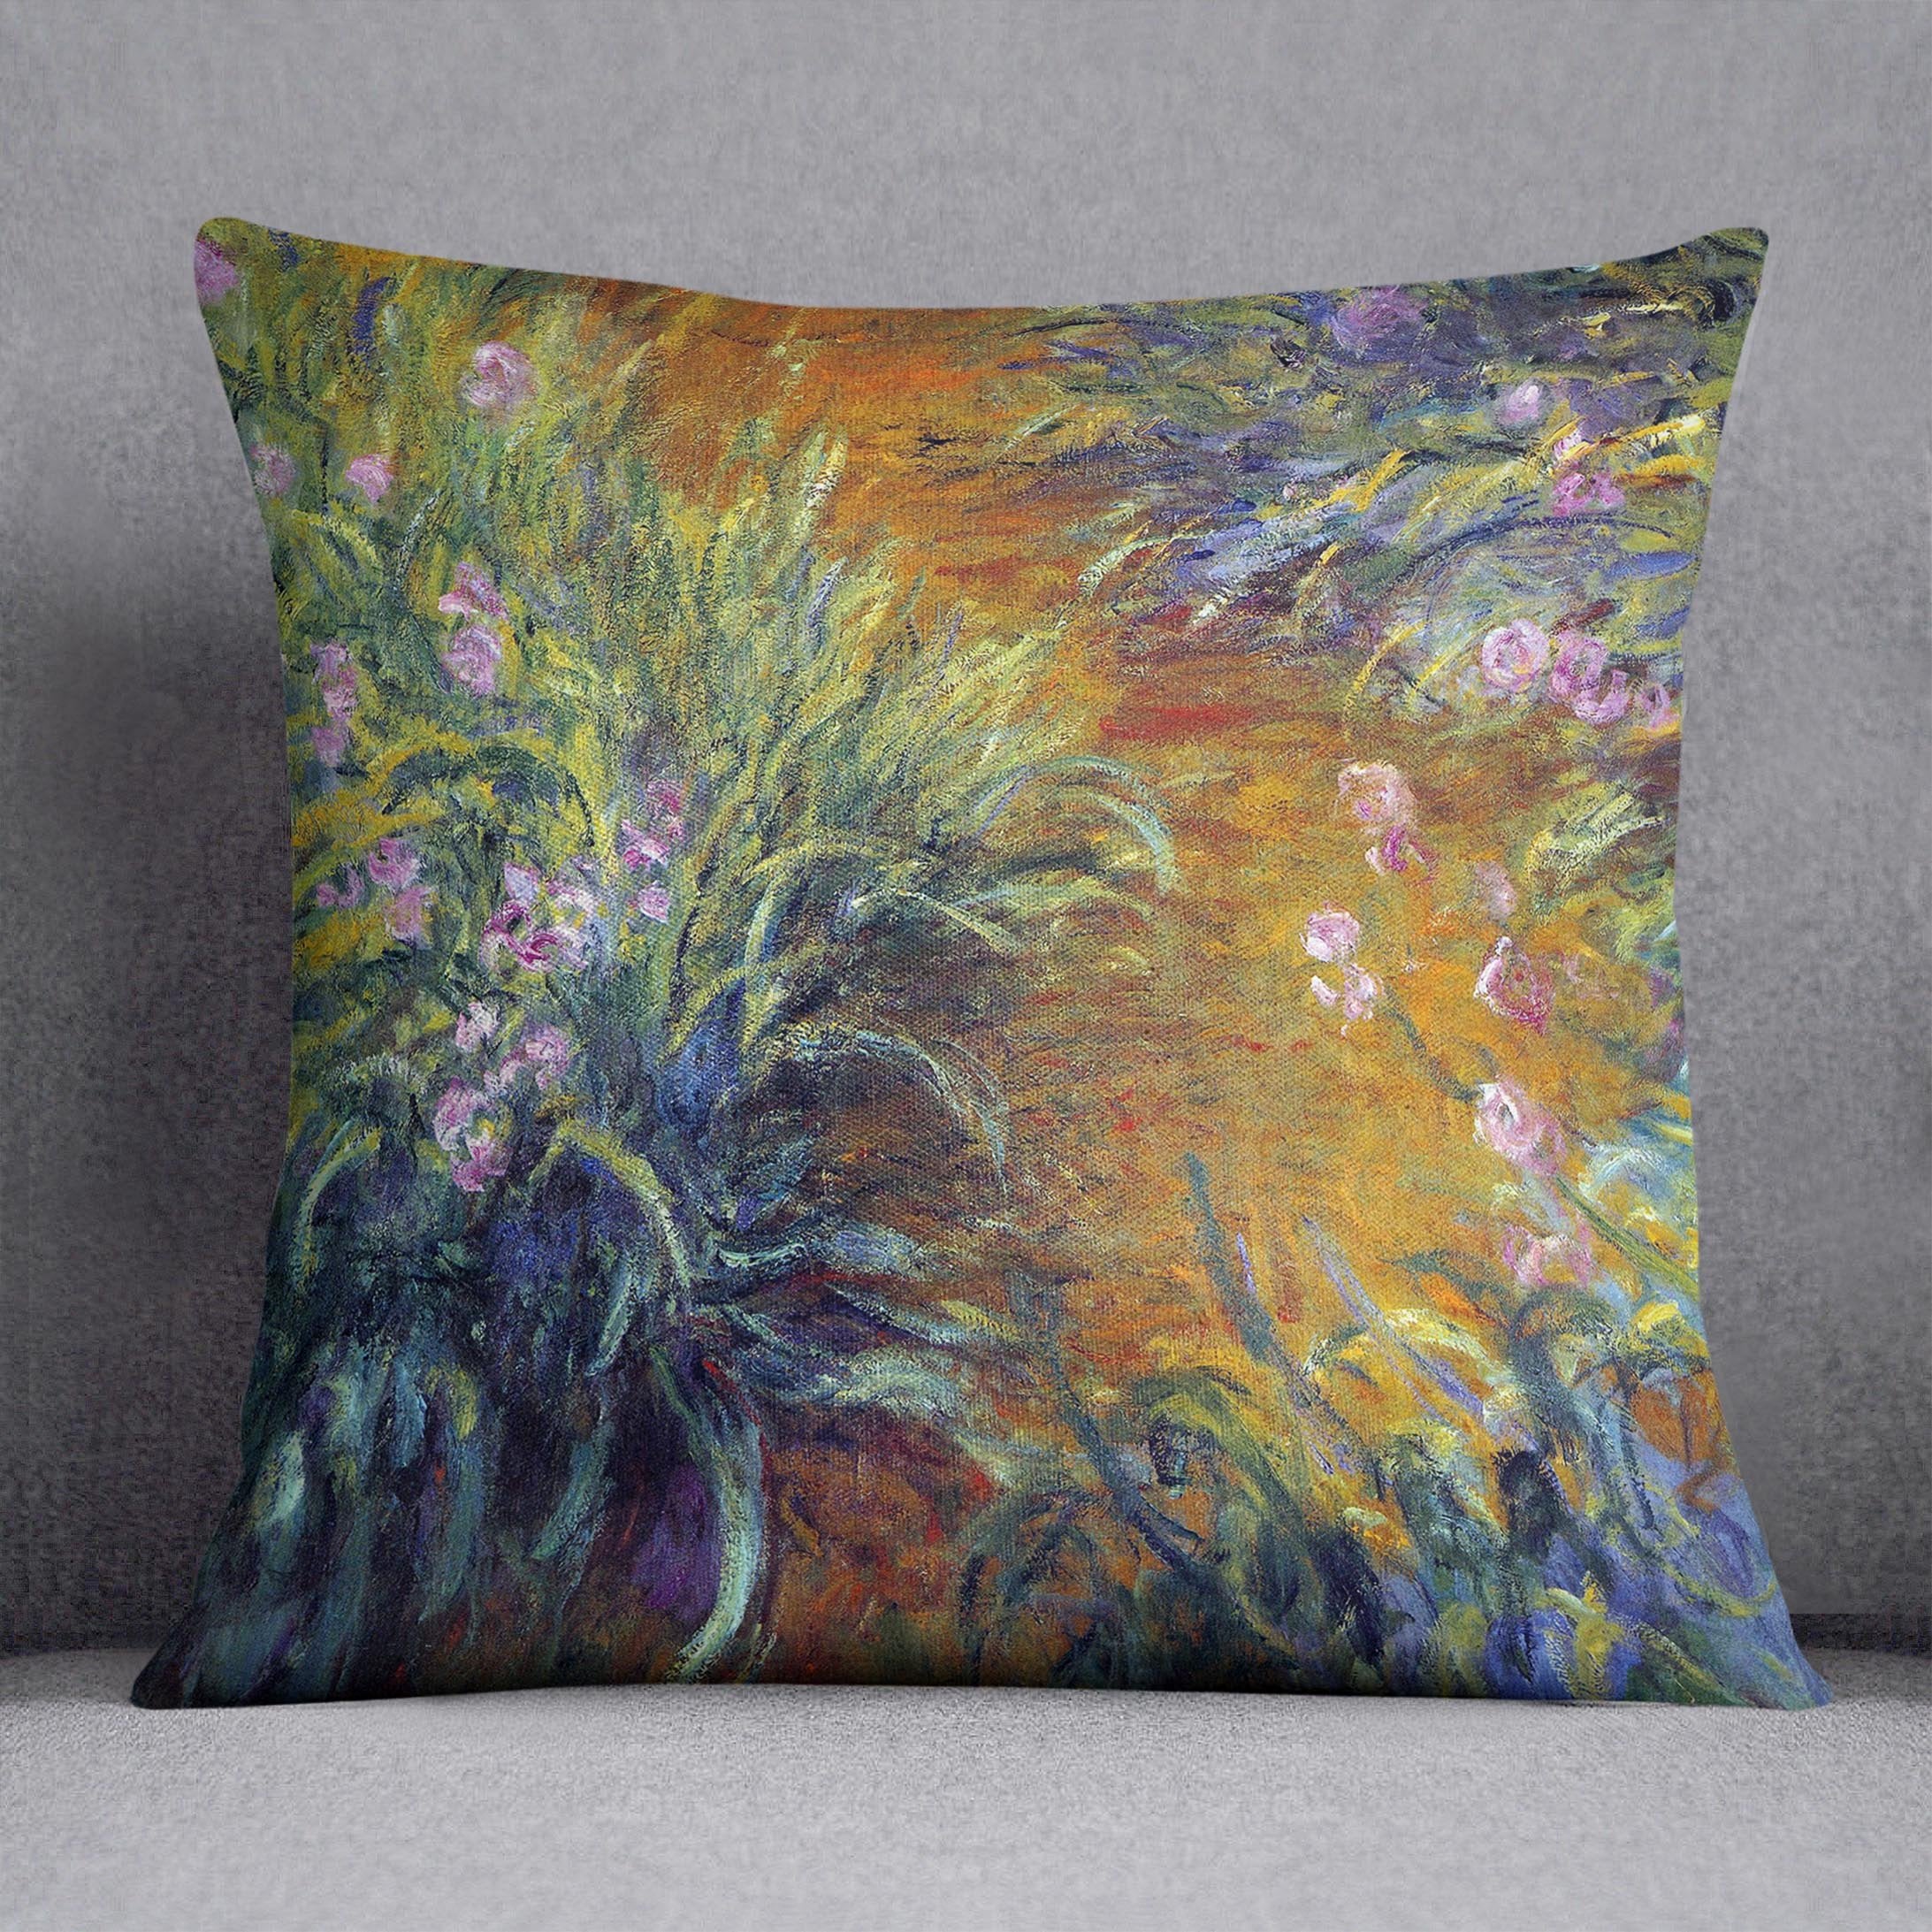 Irises by Monet Throw Pillow